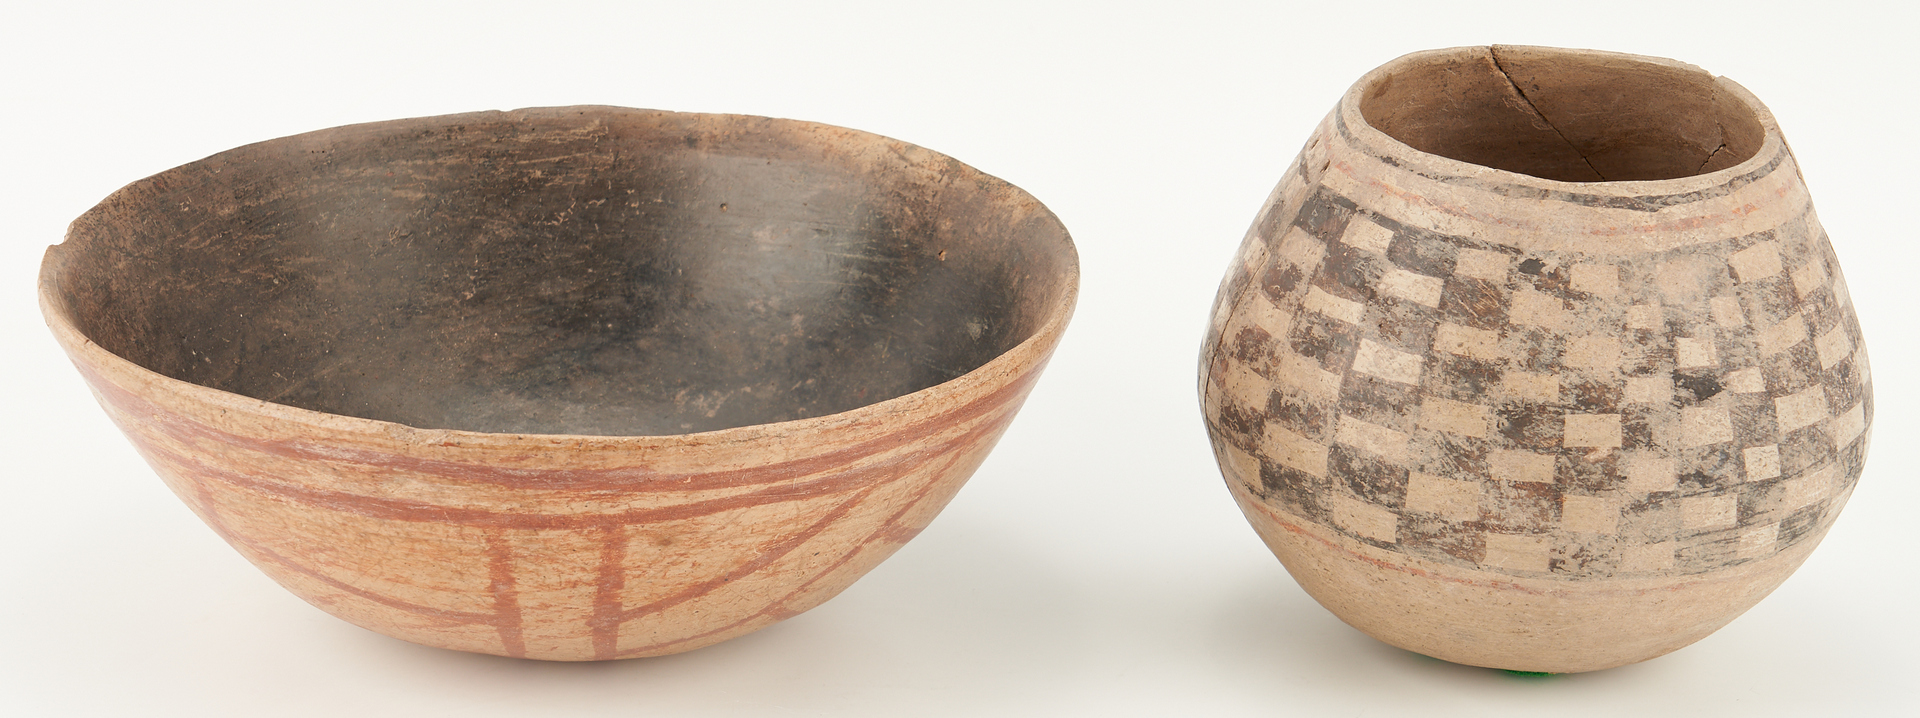 Lot 1119: 4 Native American Southwest Pottery Items & 1 Northwest Basket